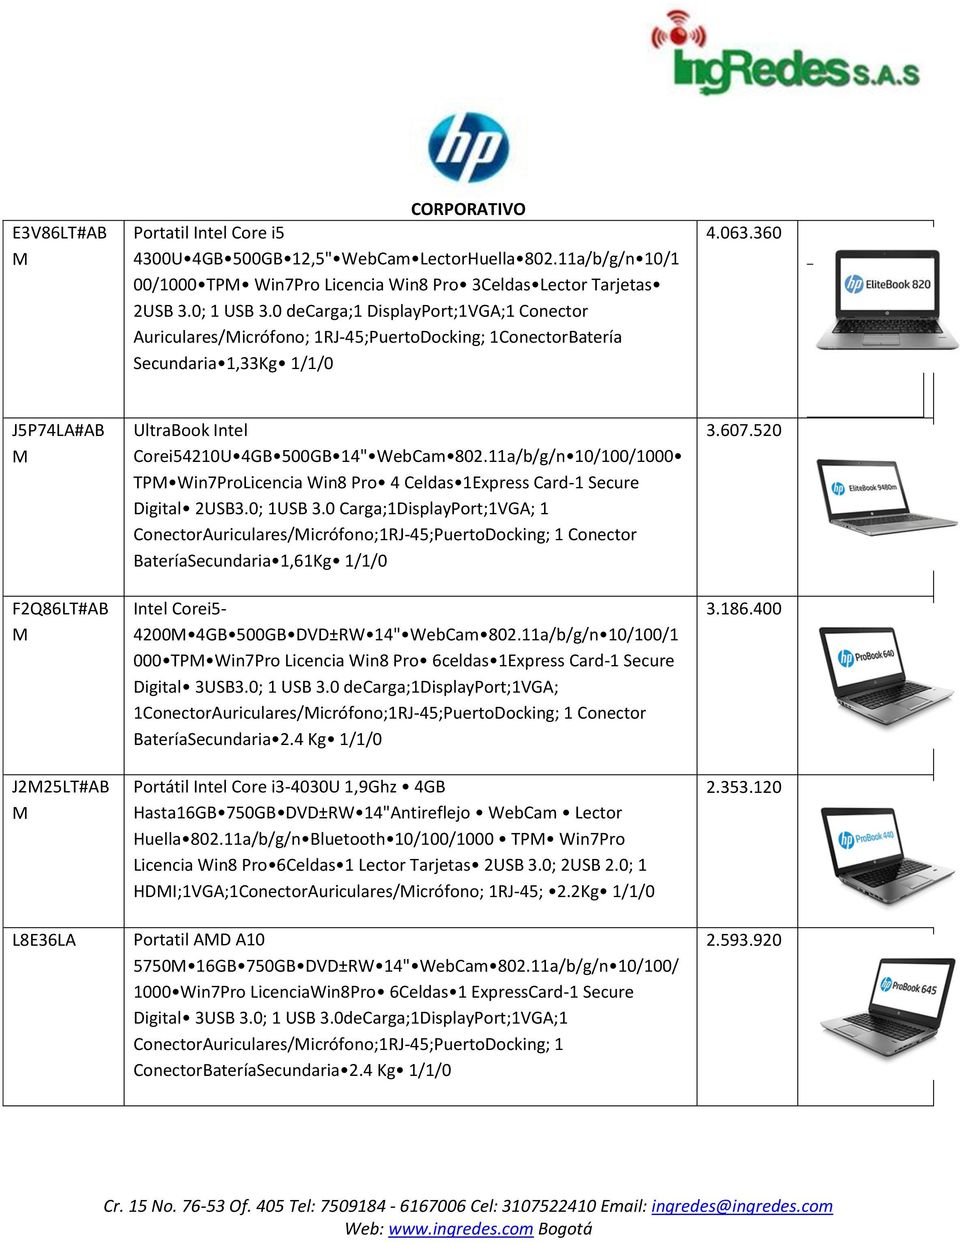 360 J5P74LA#AB F2Q86LT#AB J225LT#AB L8E36LA UltraBook Intel Corei54210U 4GB 500GB 14" WebCam 802.11a/b/g/n 10/100/1000 TP Win7ProLicencia Win8 Pro 4 Celdas 1Express Card-1 Secure Digital 2USB3.